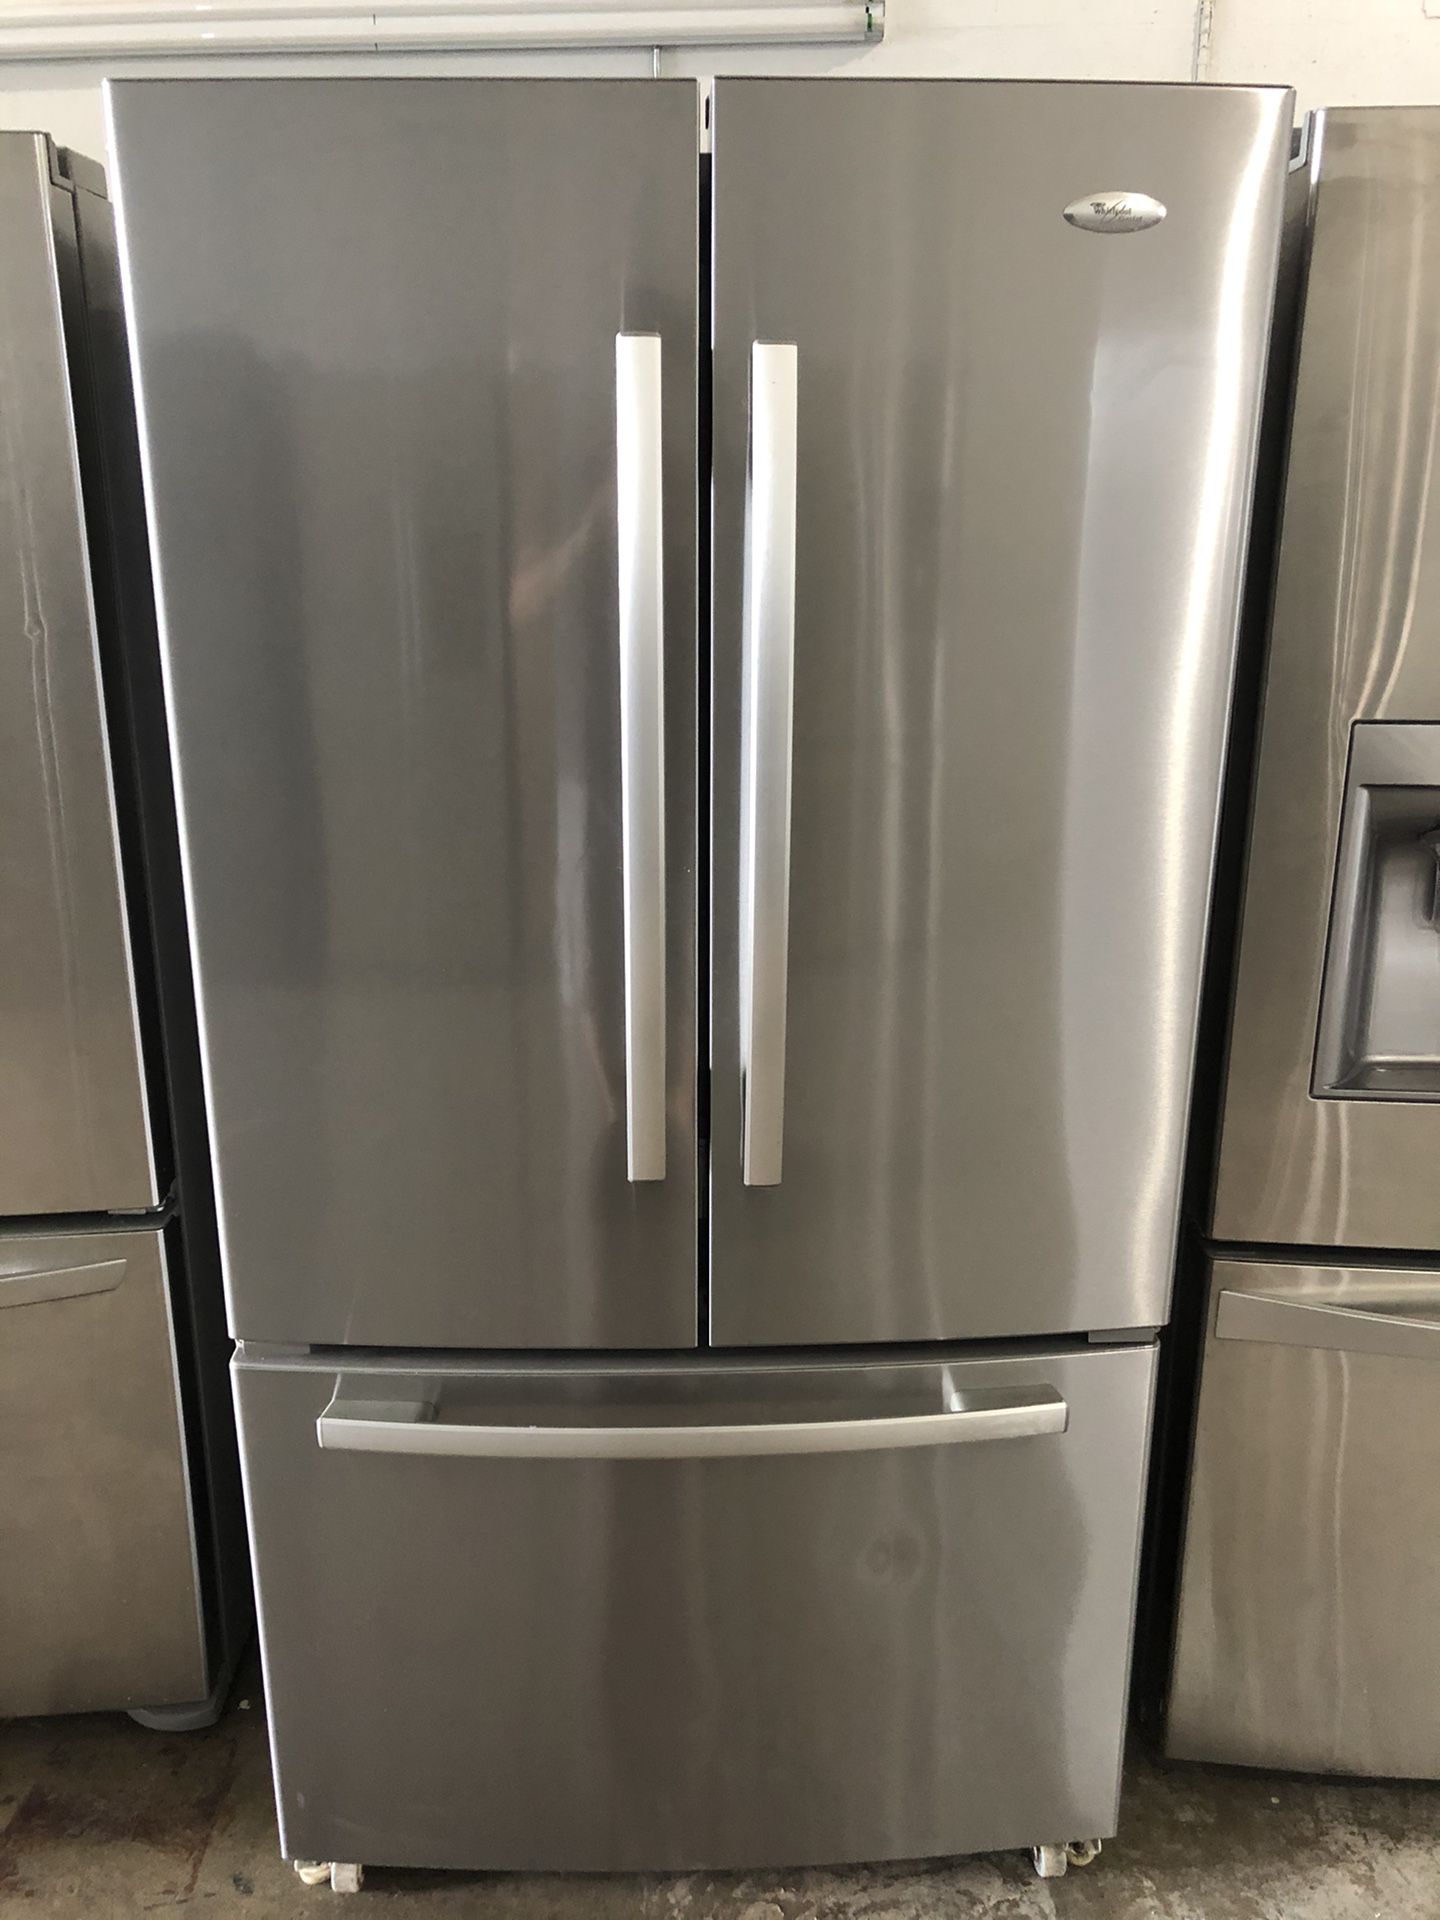 36” whirlpool fridge refrigerator nevera refrigerador stainless steel French door good condition we fix